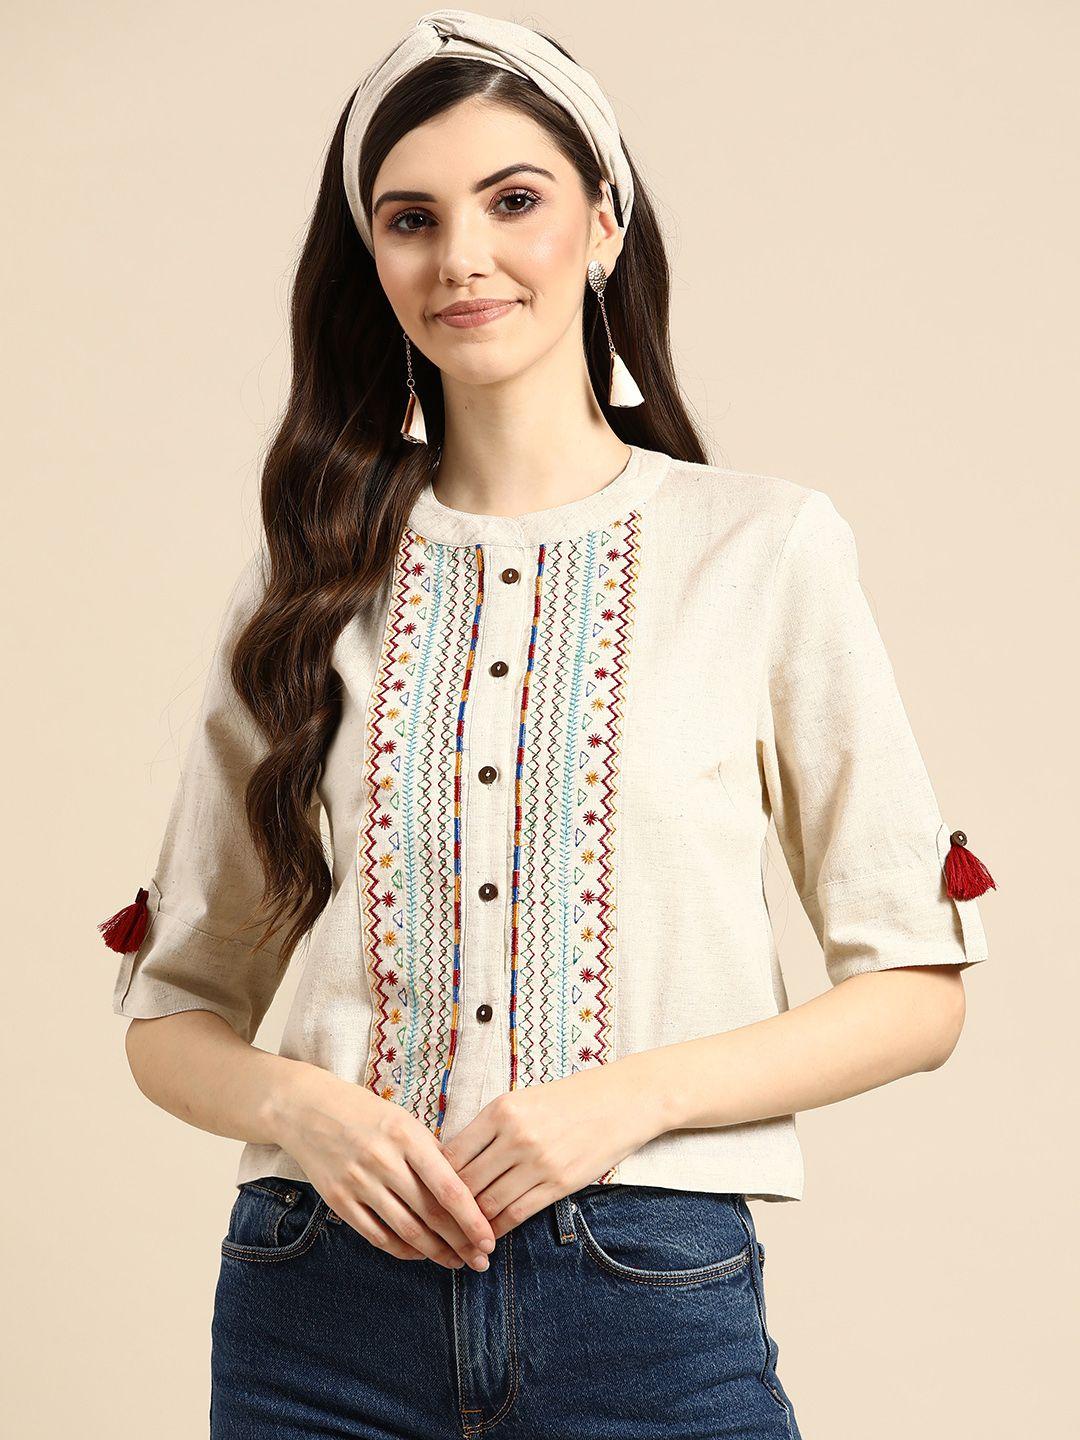 sangria-off-white-&-maroon-geometric-print-mandarin-collar-roll-up-sleeves-shirt-style-top